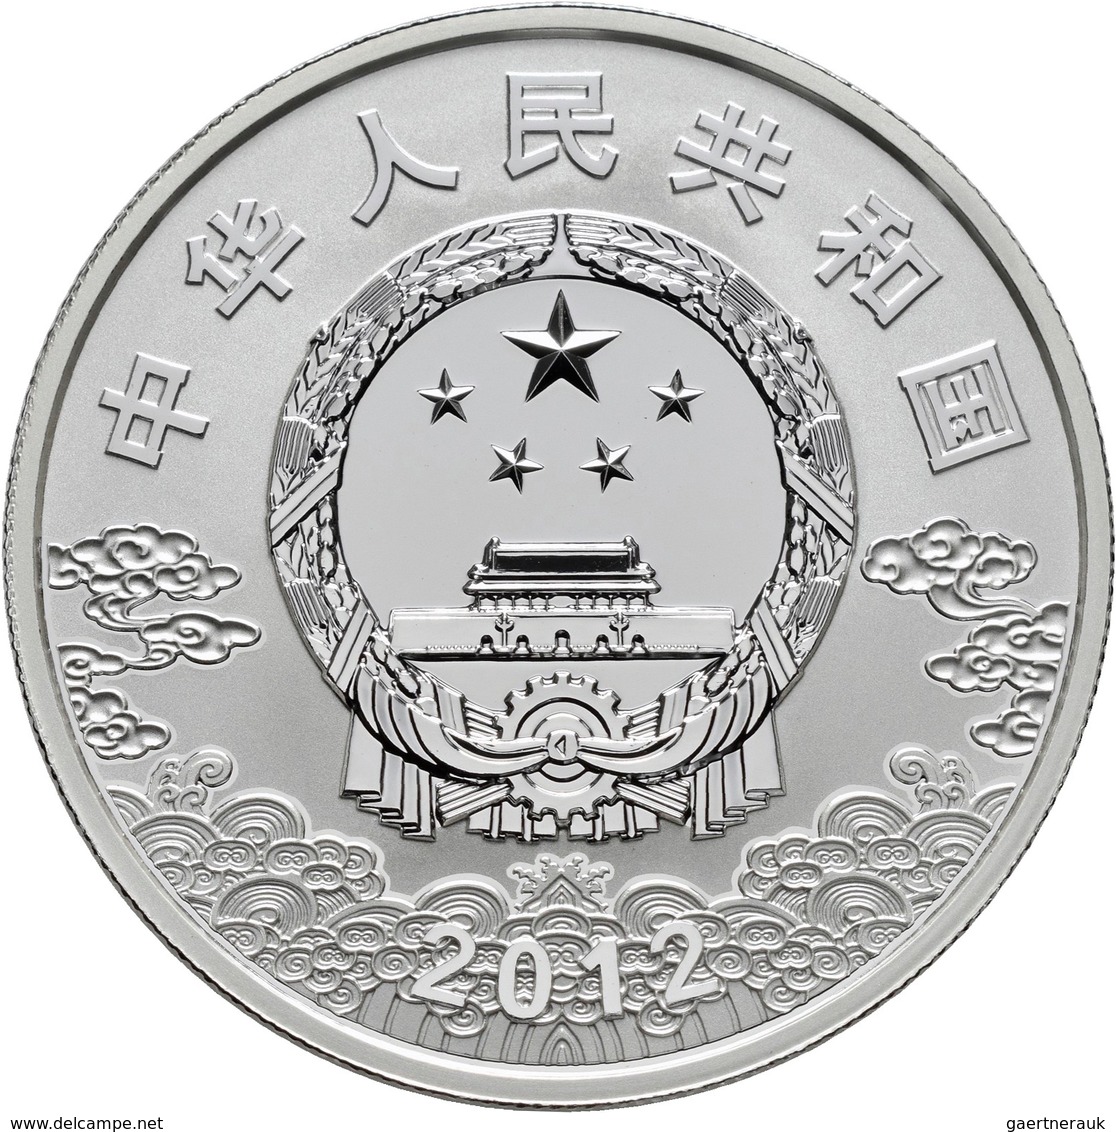 China - Volksrepublik: Set 2 Münzen 2012: Peking Opera Facial Mask III. Serie: 2 X 10 Yuan 2012. Je - China